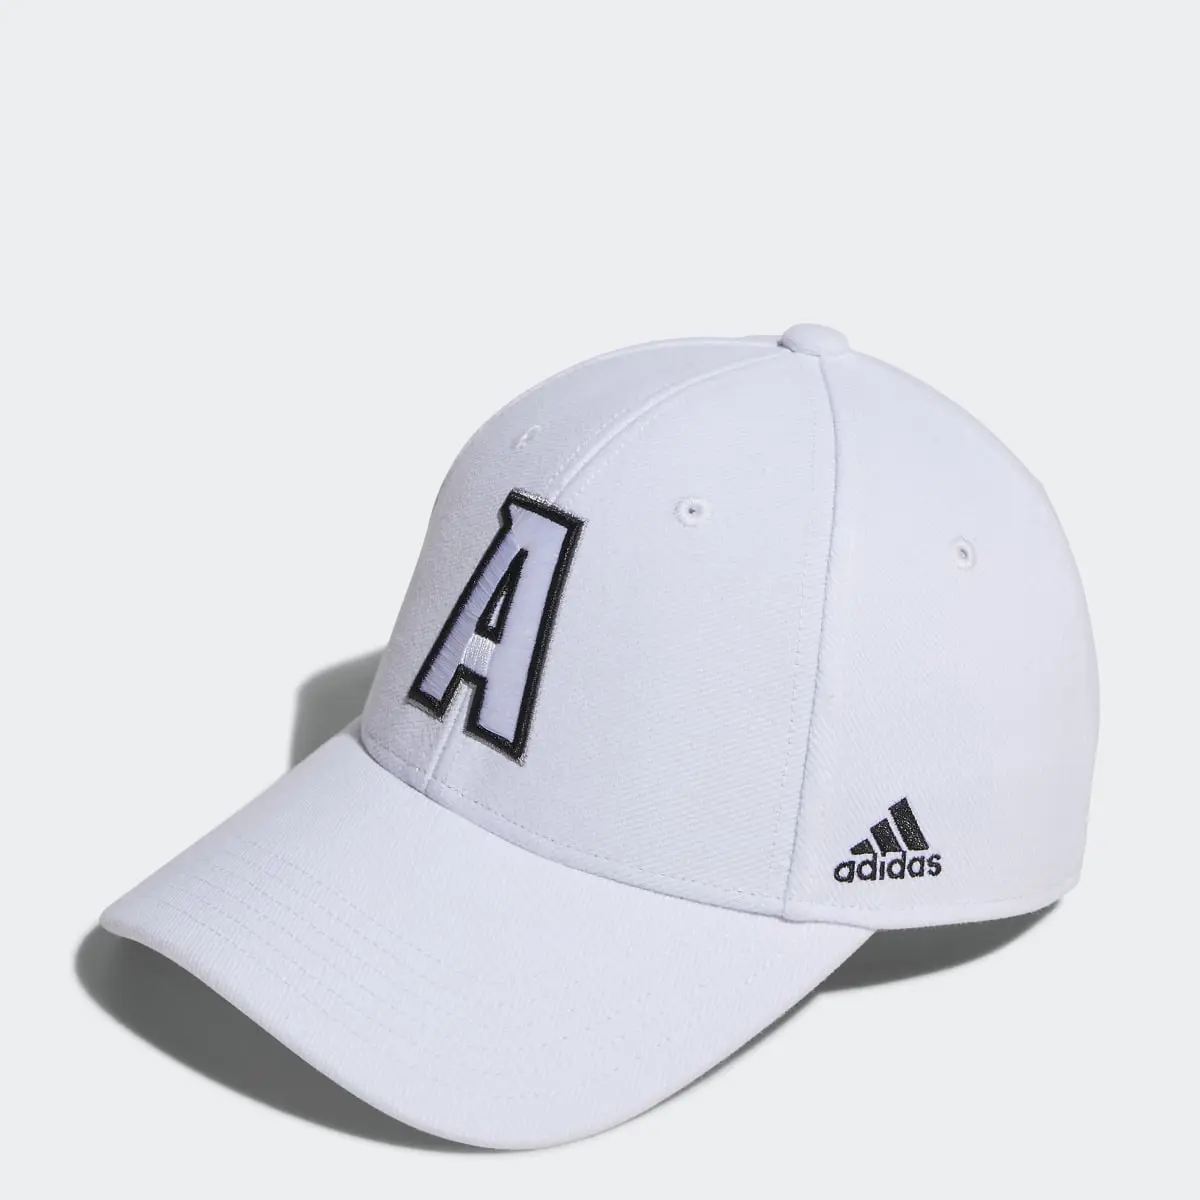 Adidas Structured Adjustable Hat. 1